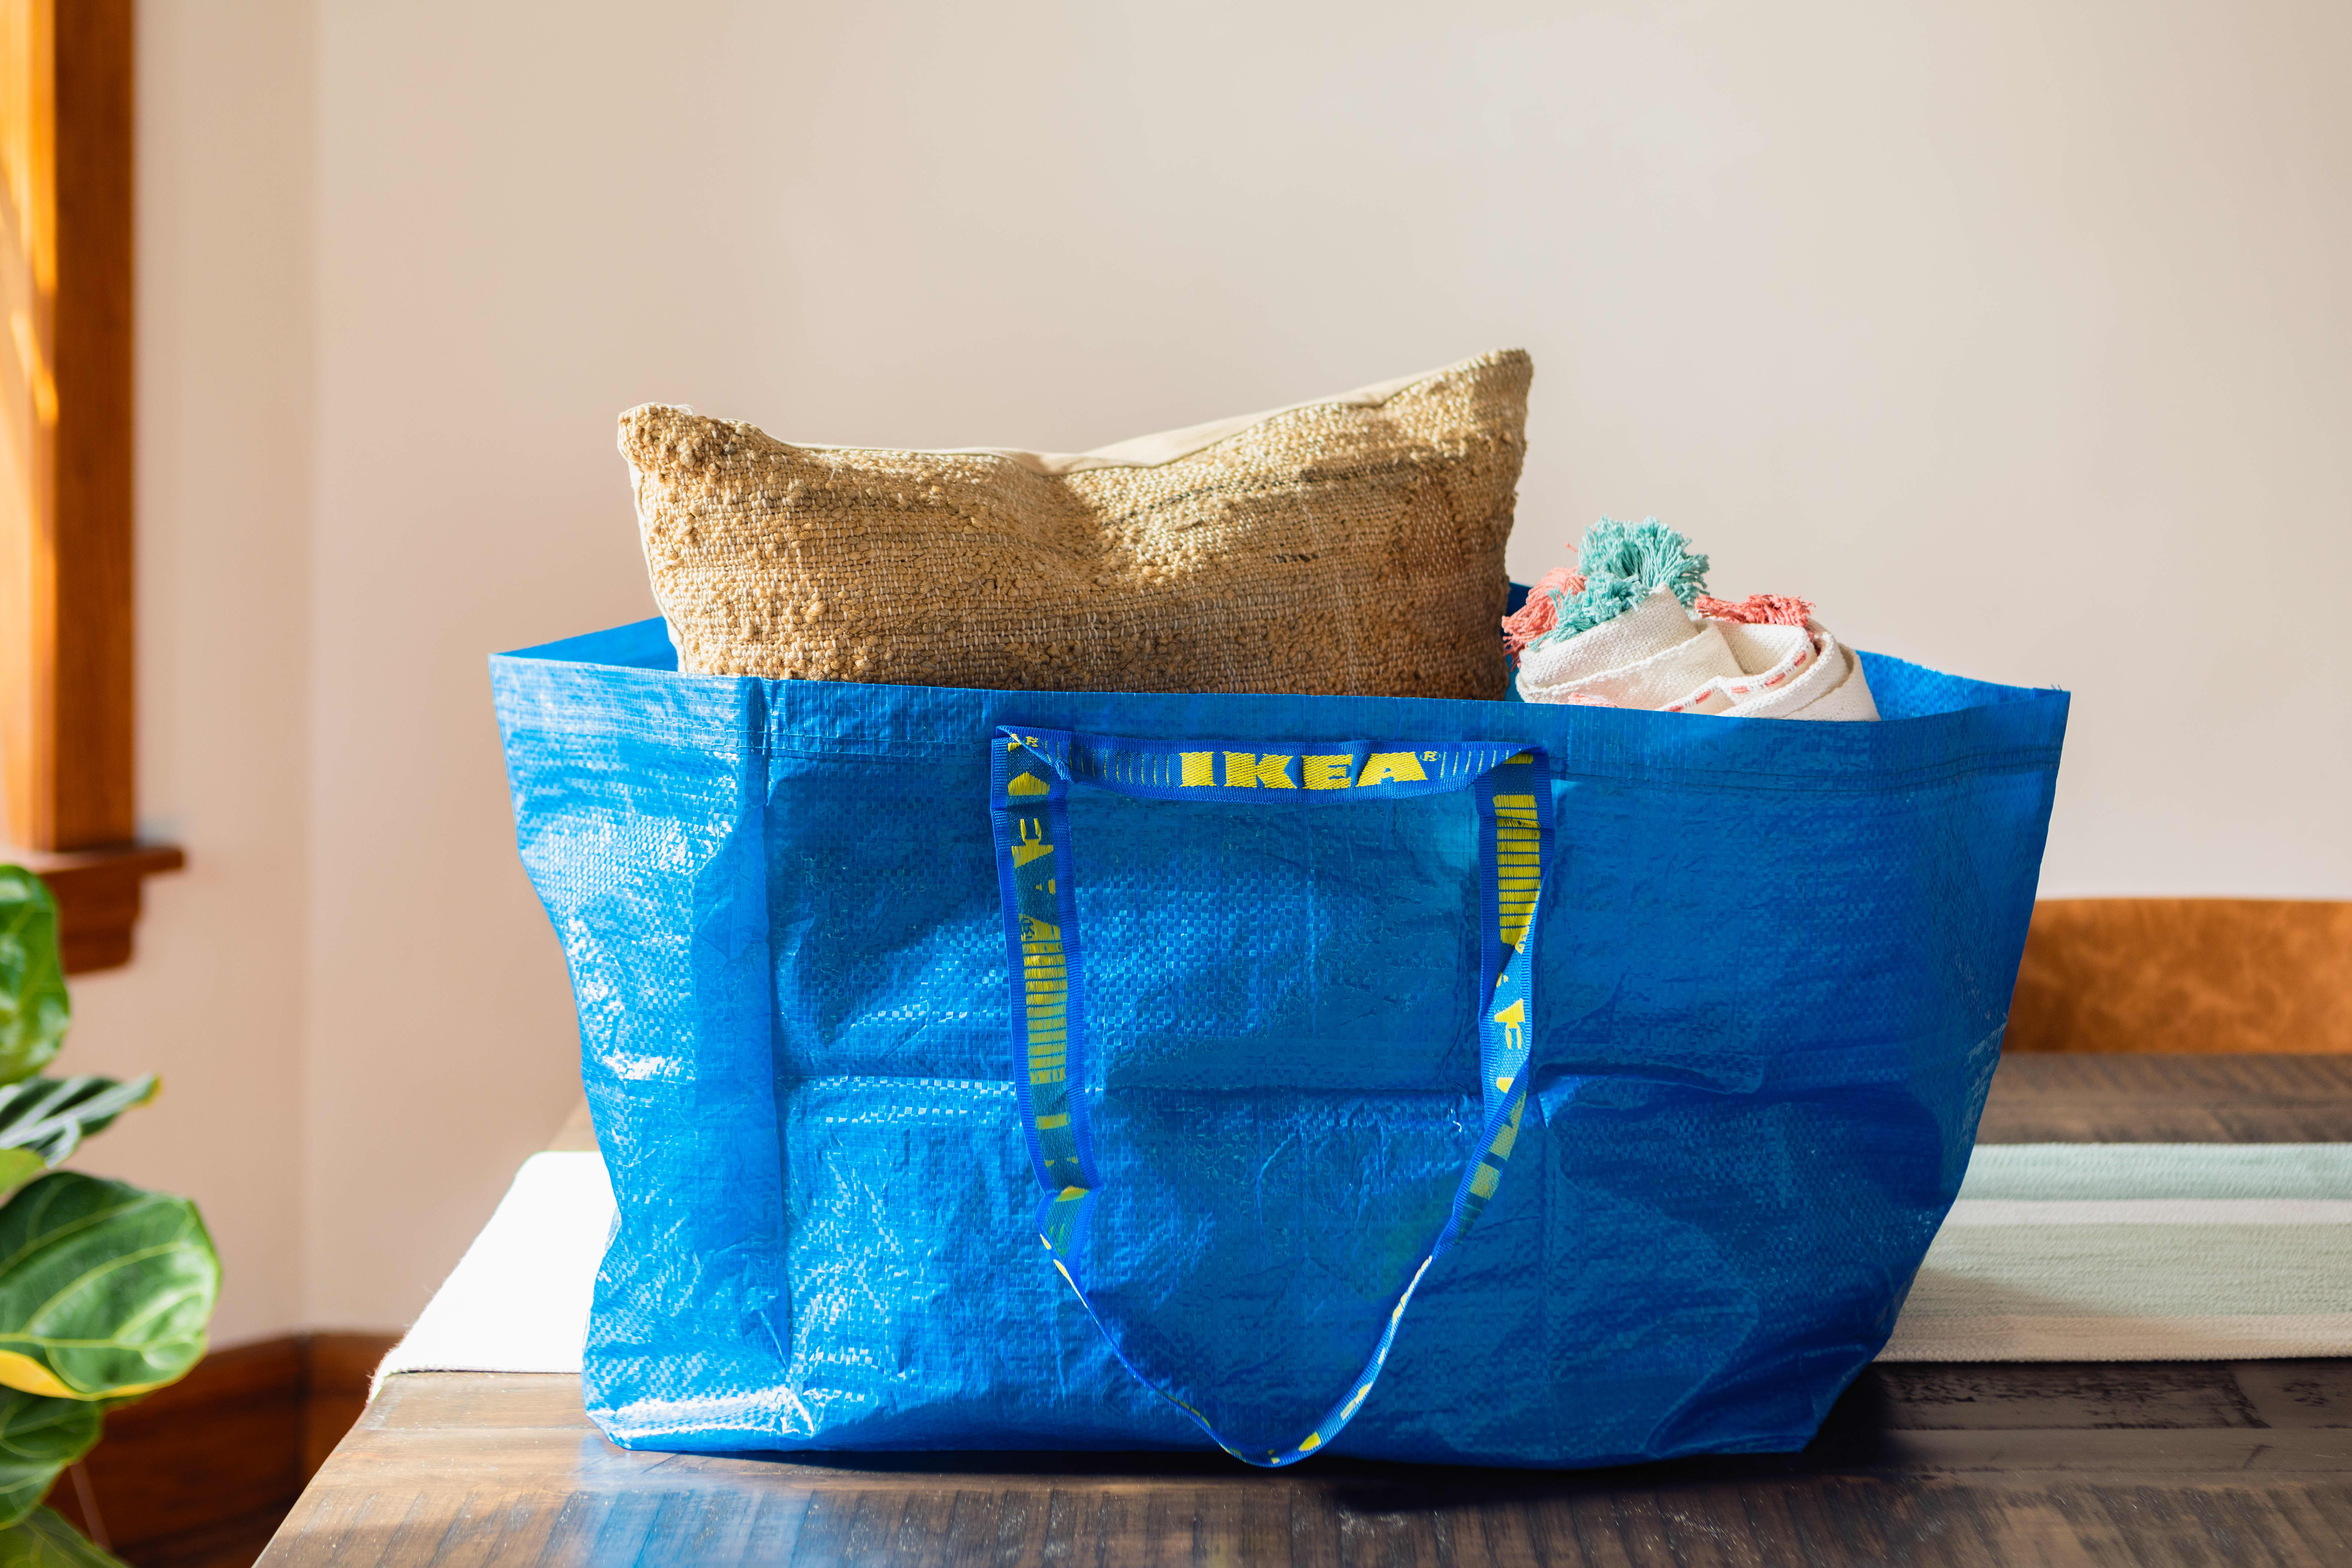 chanel plastic beach bag